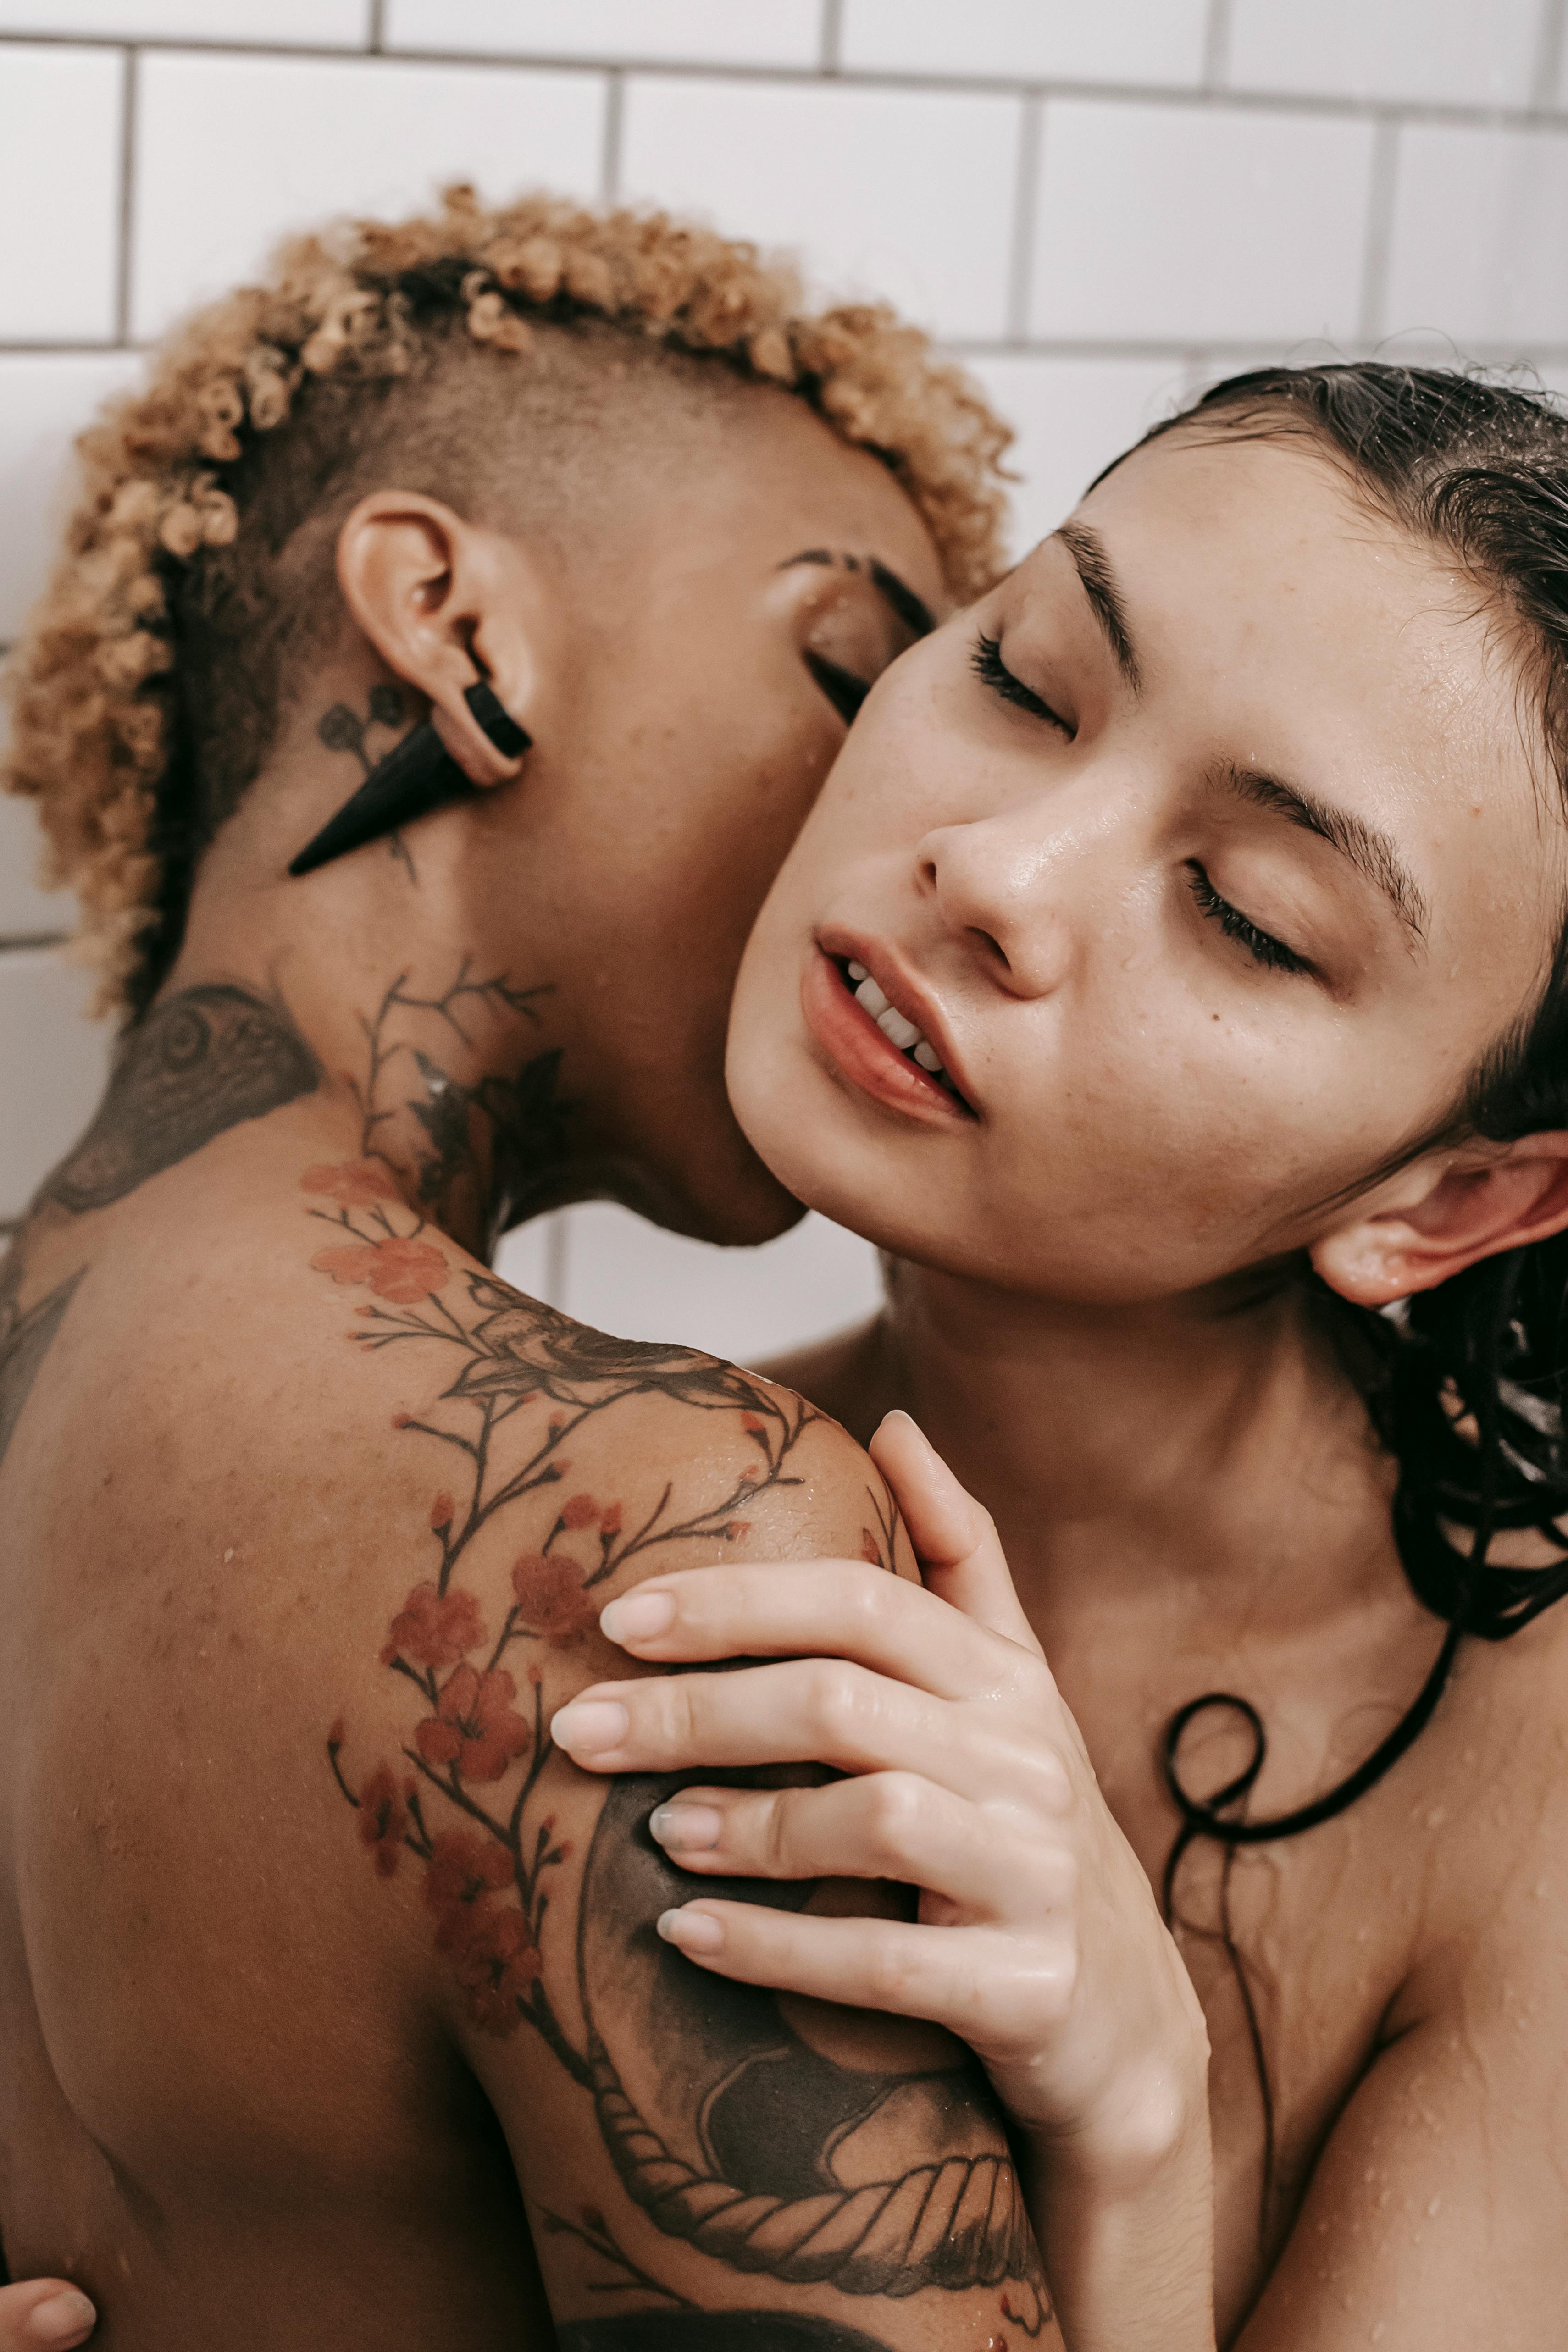 black woman kissing ethnic female with closed eyes in bathroom